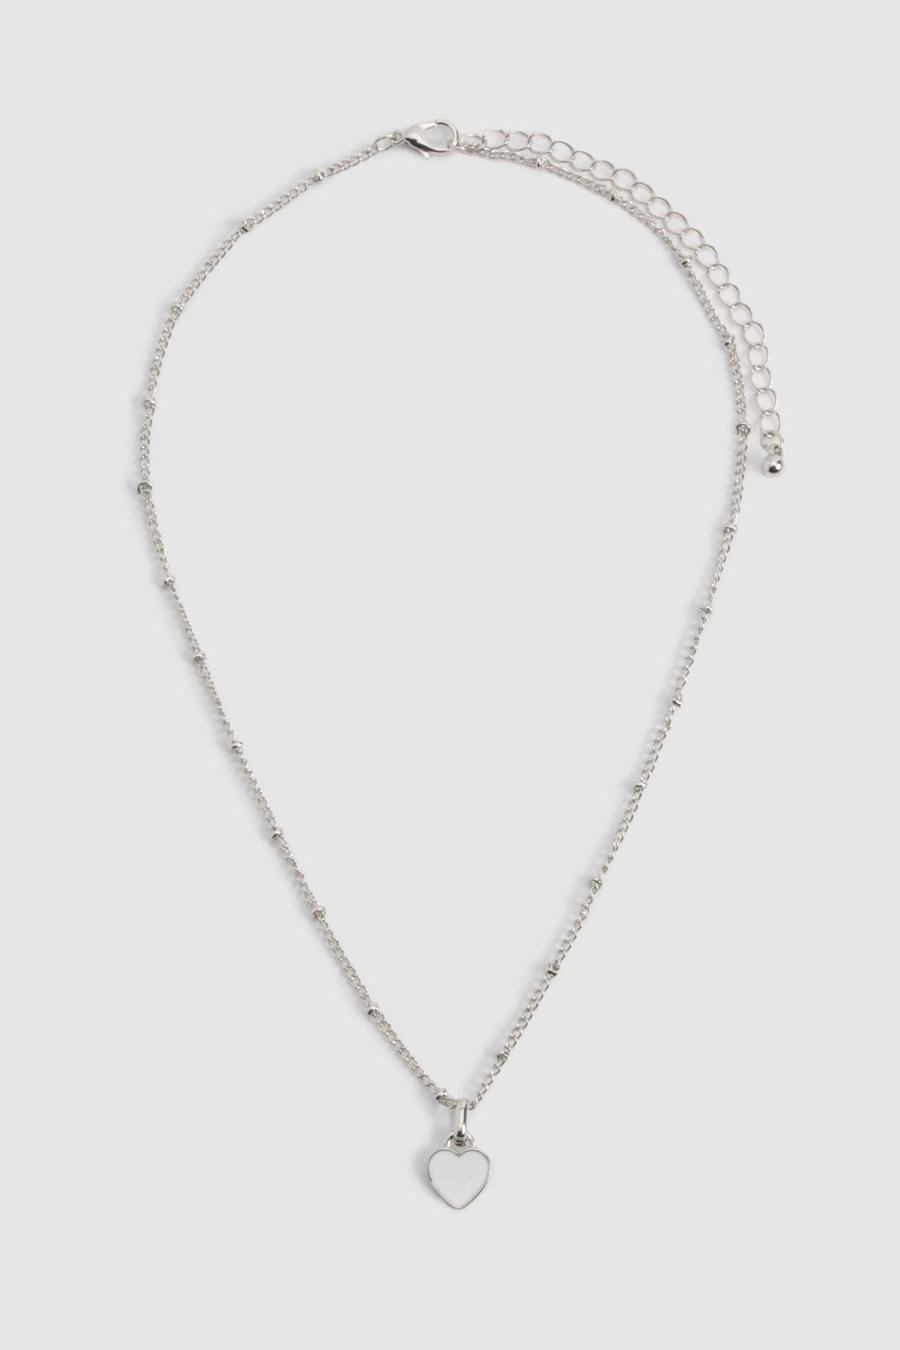 Silver White Enamel Heart Necklace 